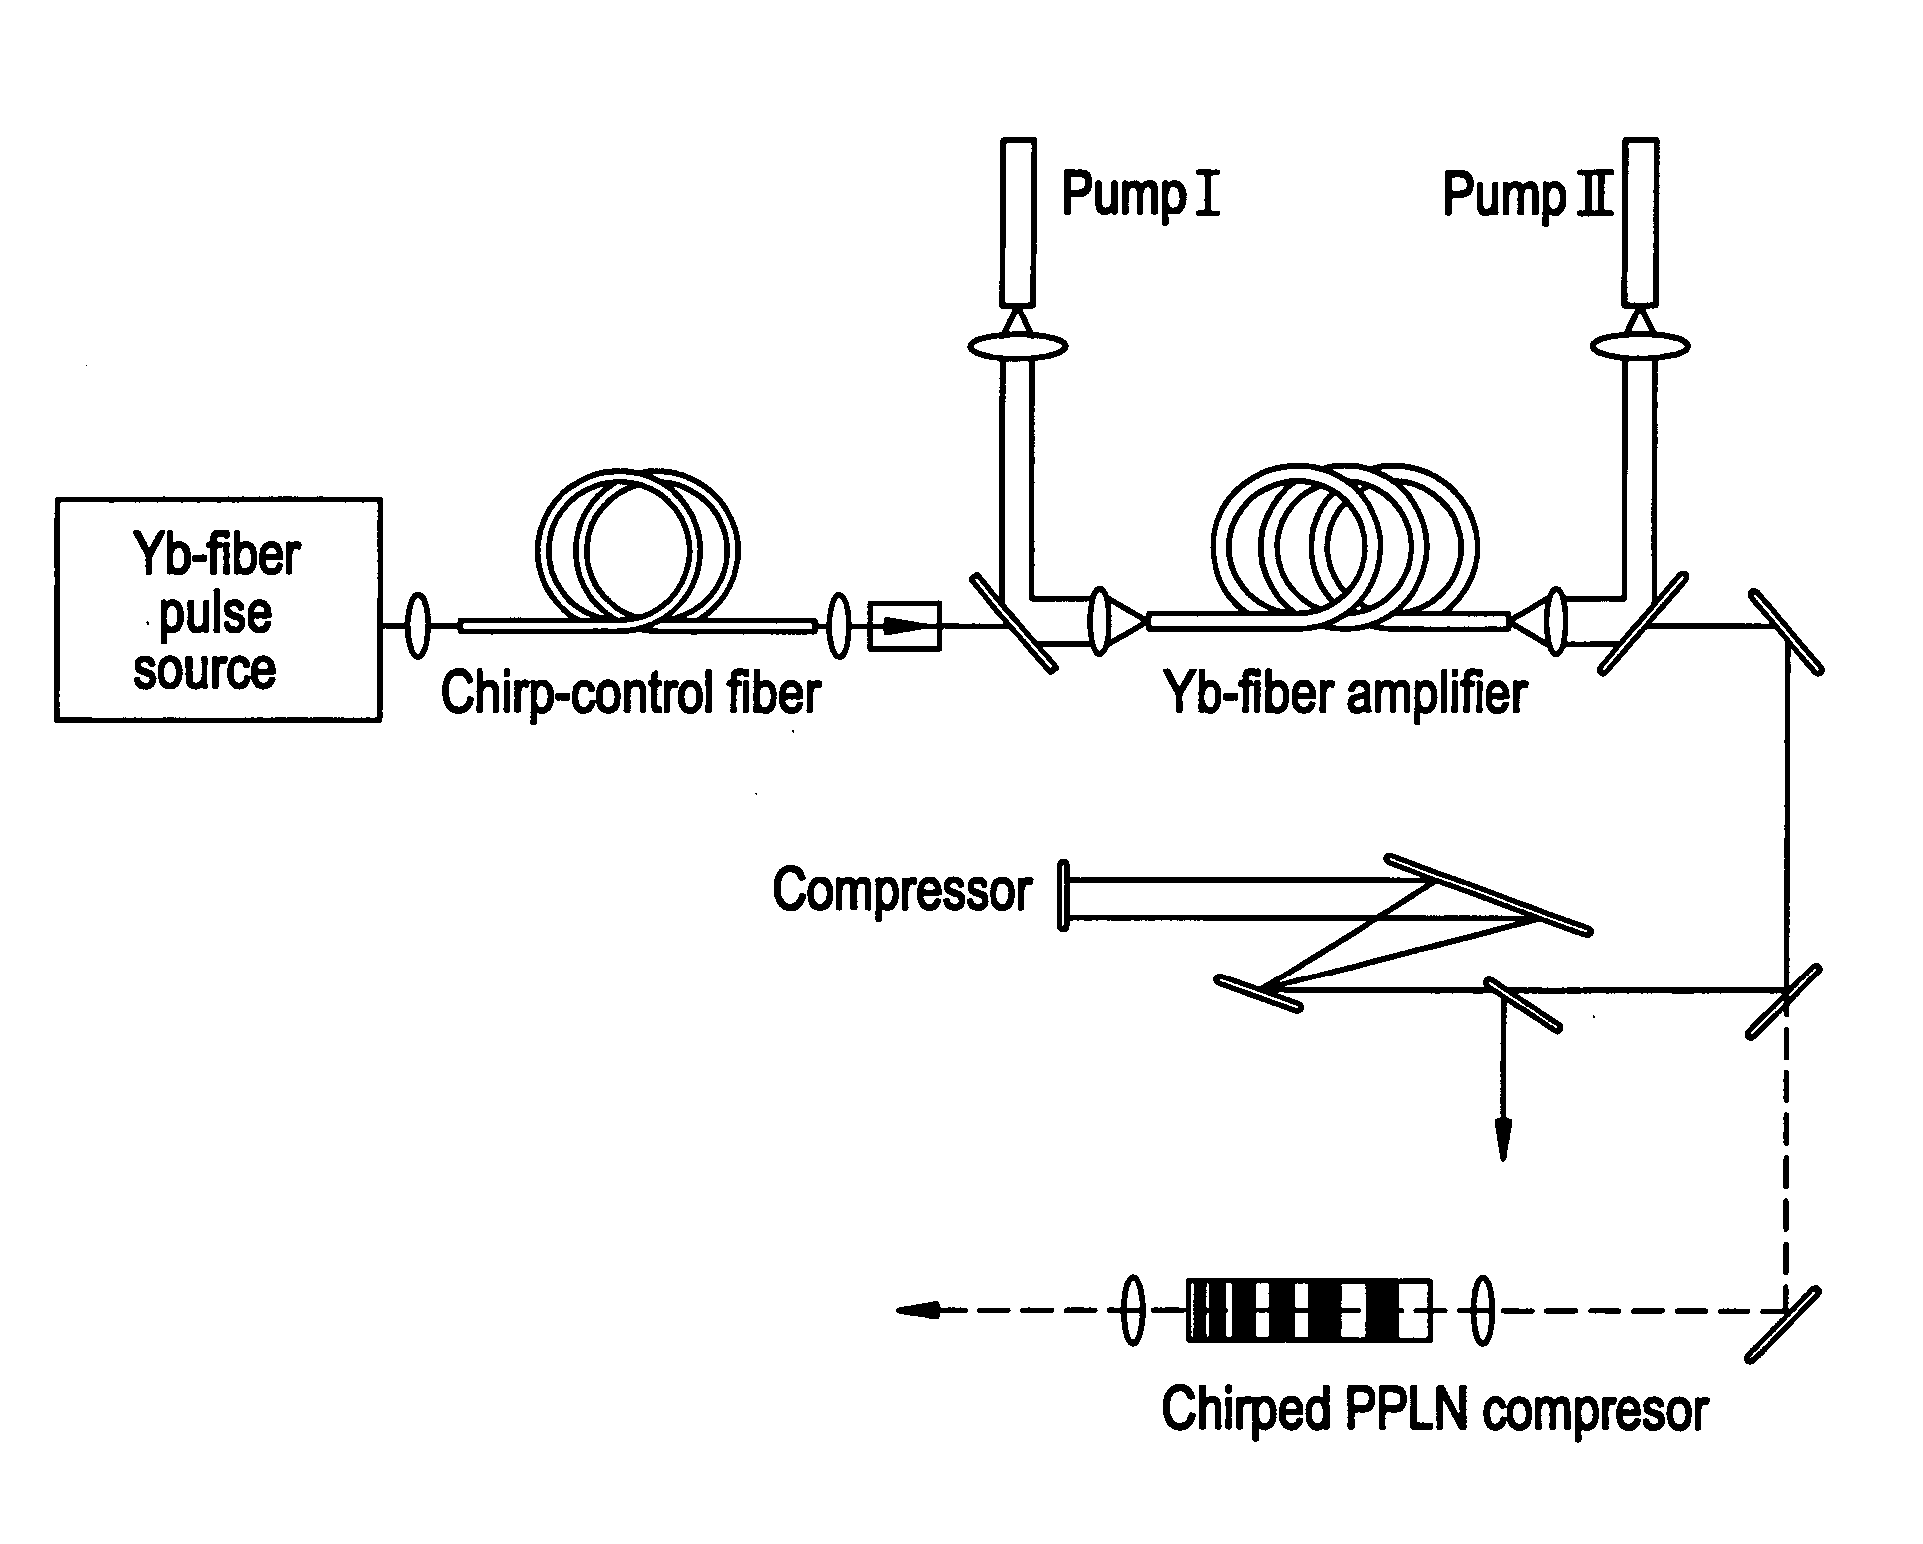 Modular fiber-based chirped pulse amplification system